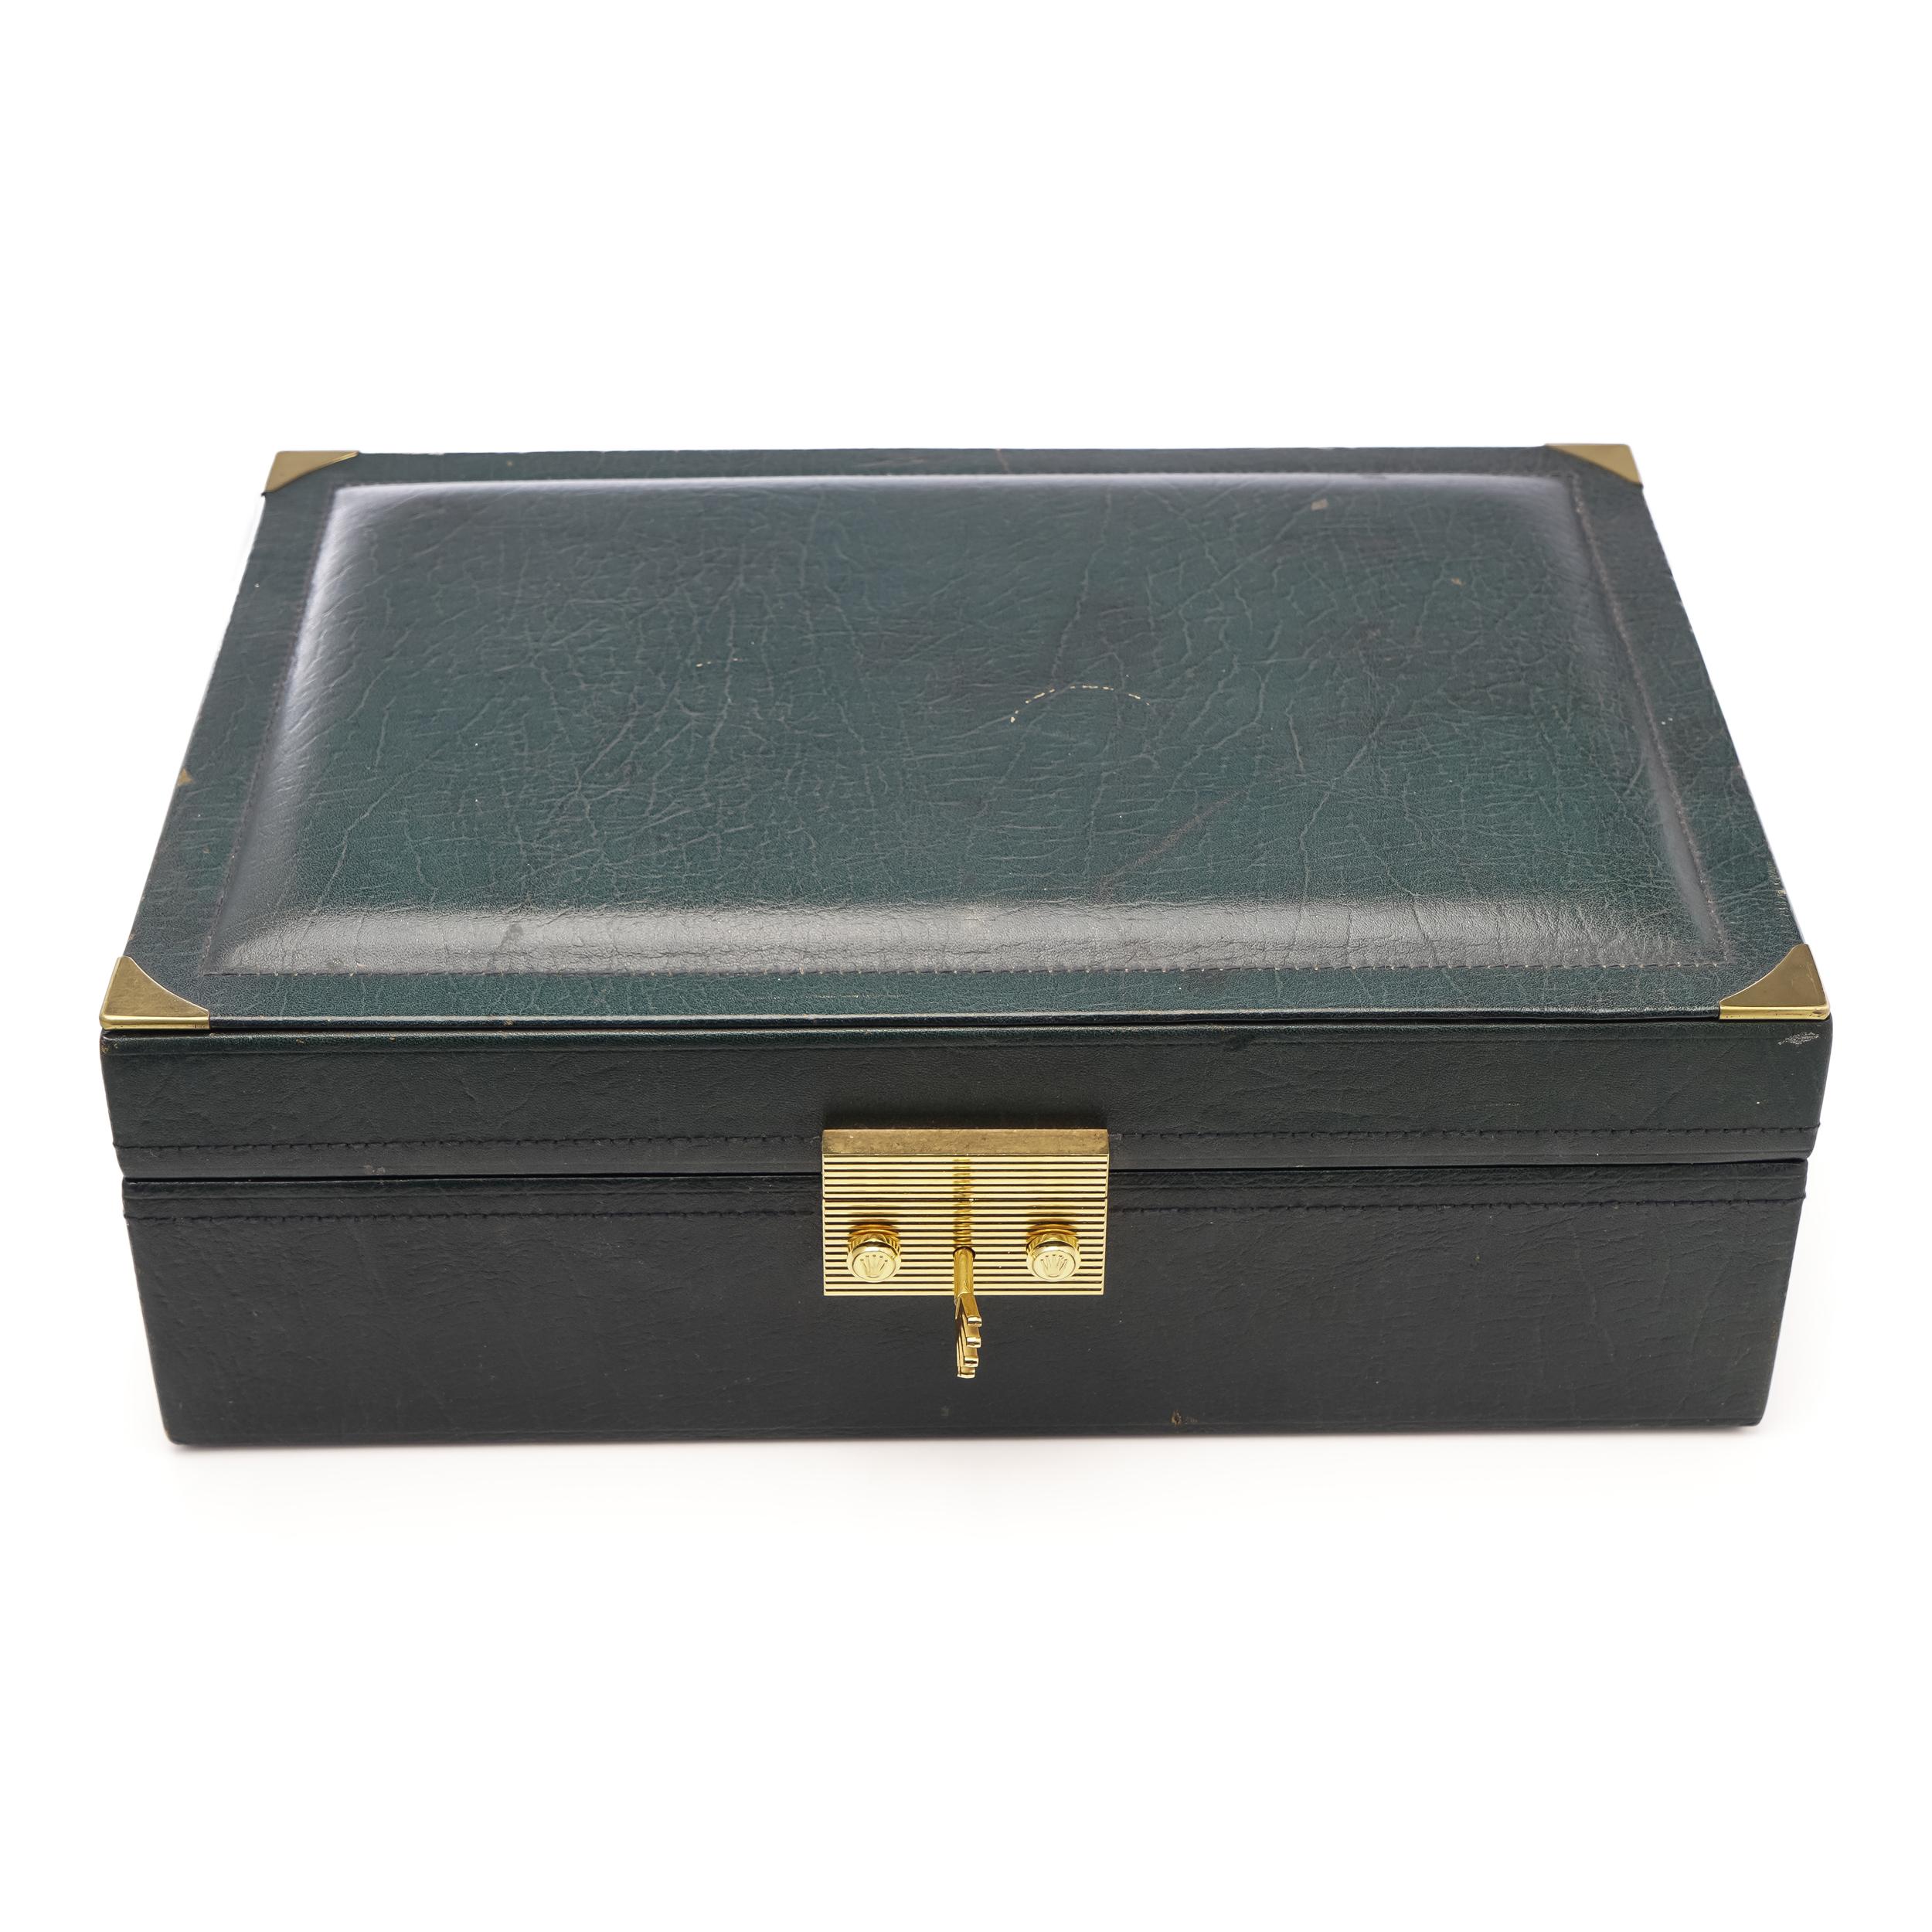 Swiss Rolex Jumbo vintage classic green leather presentation watch and jewellery box